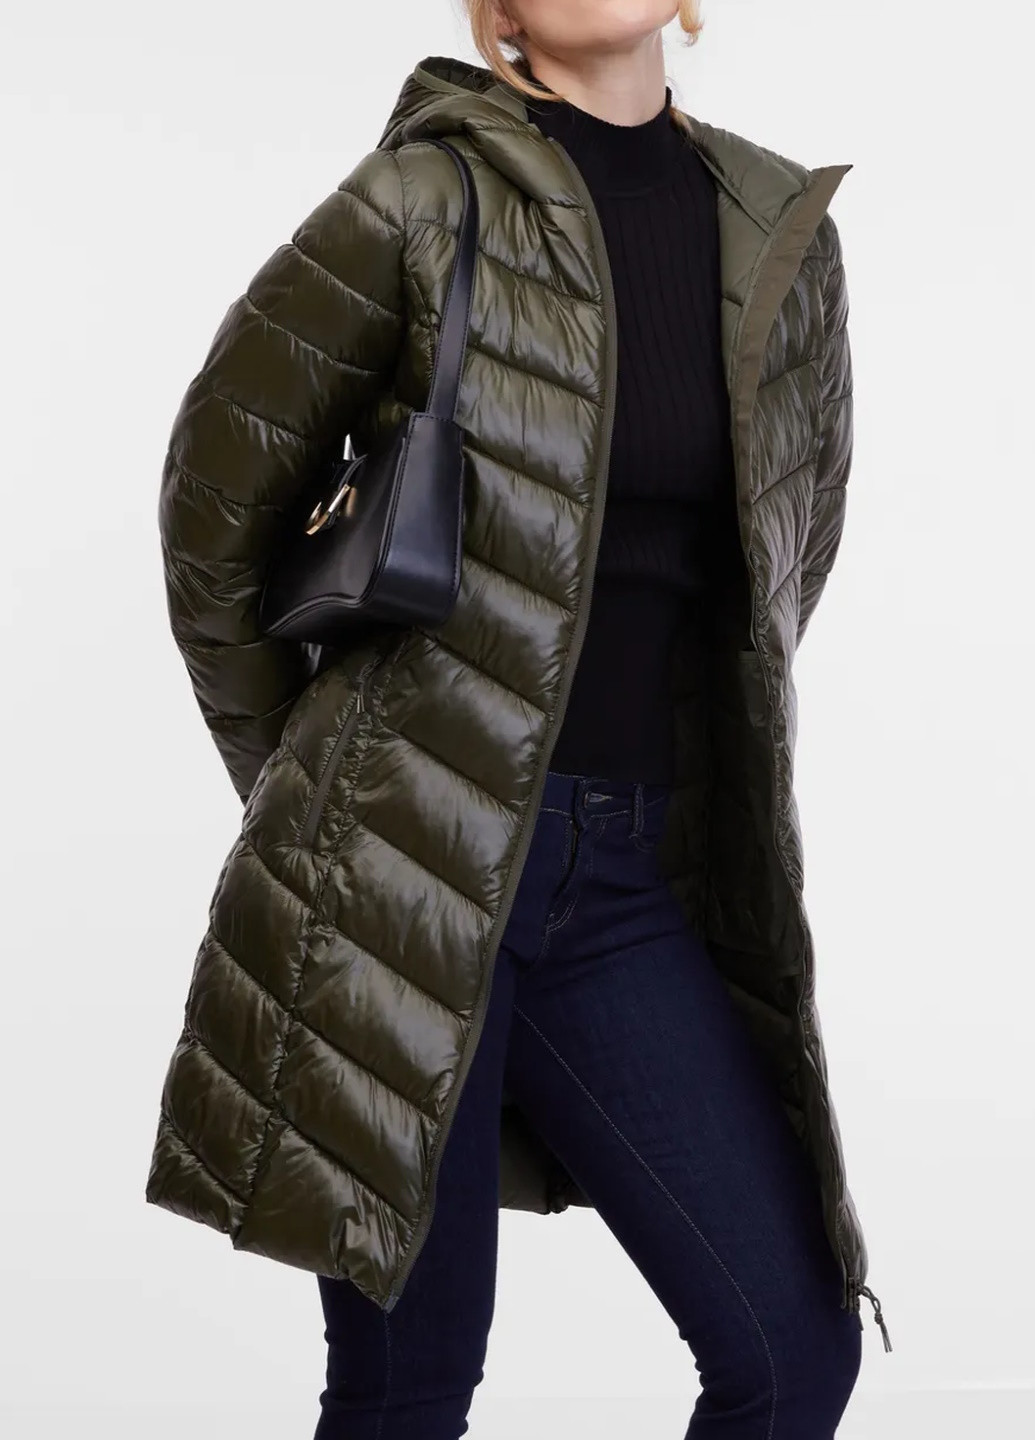 Оливковая (хаки) зимняя куртка Orsay